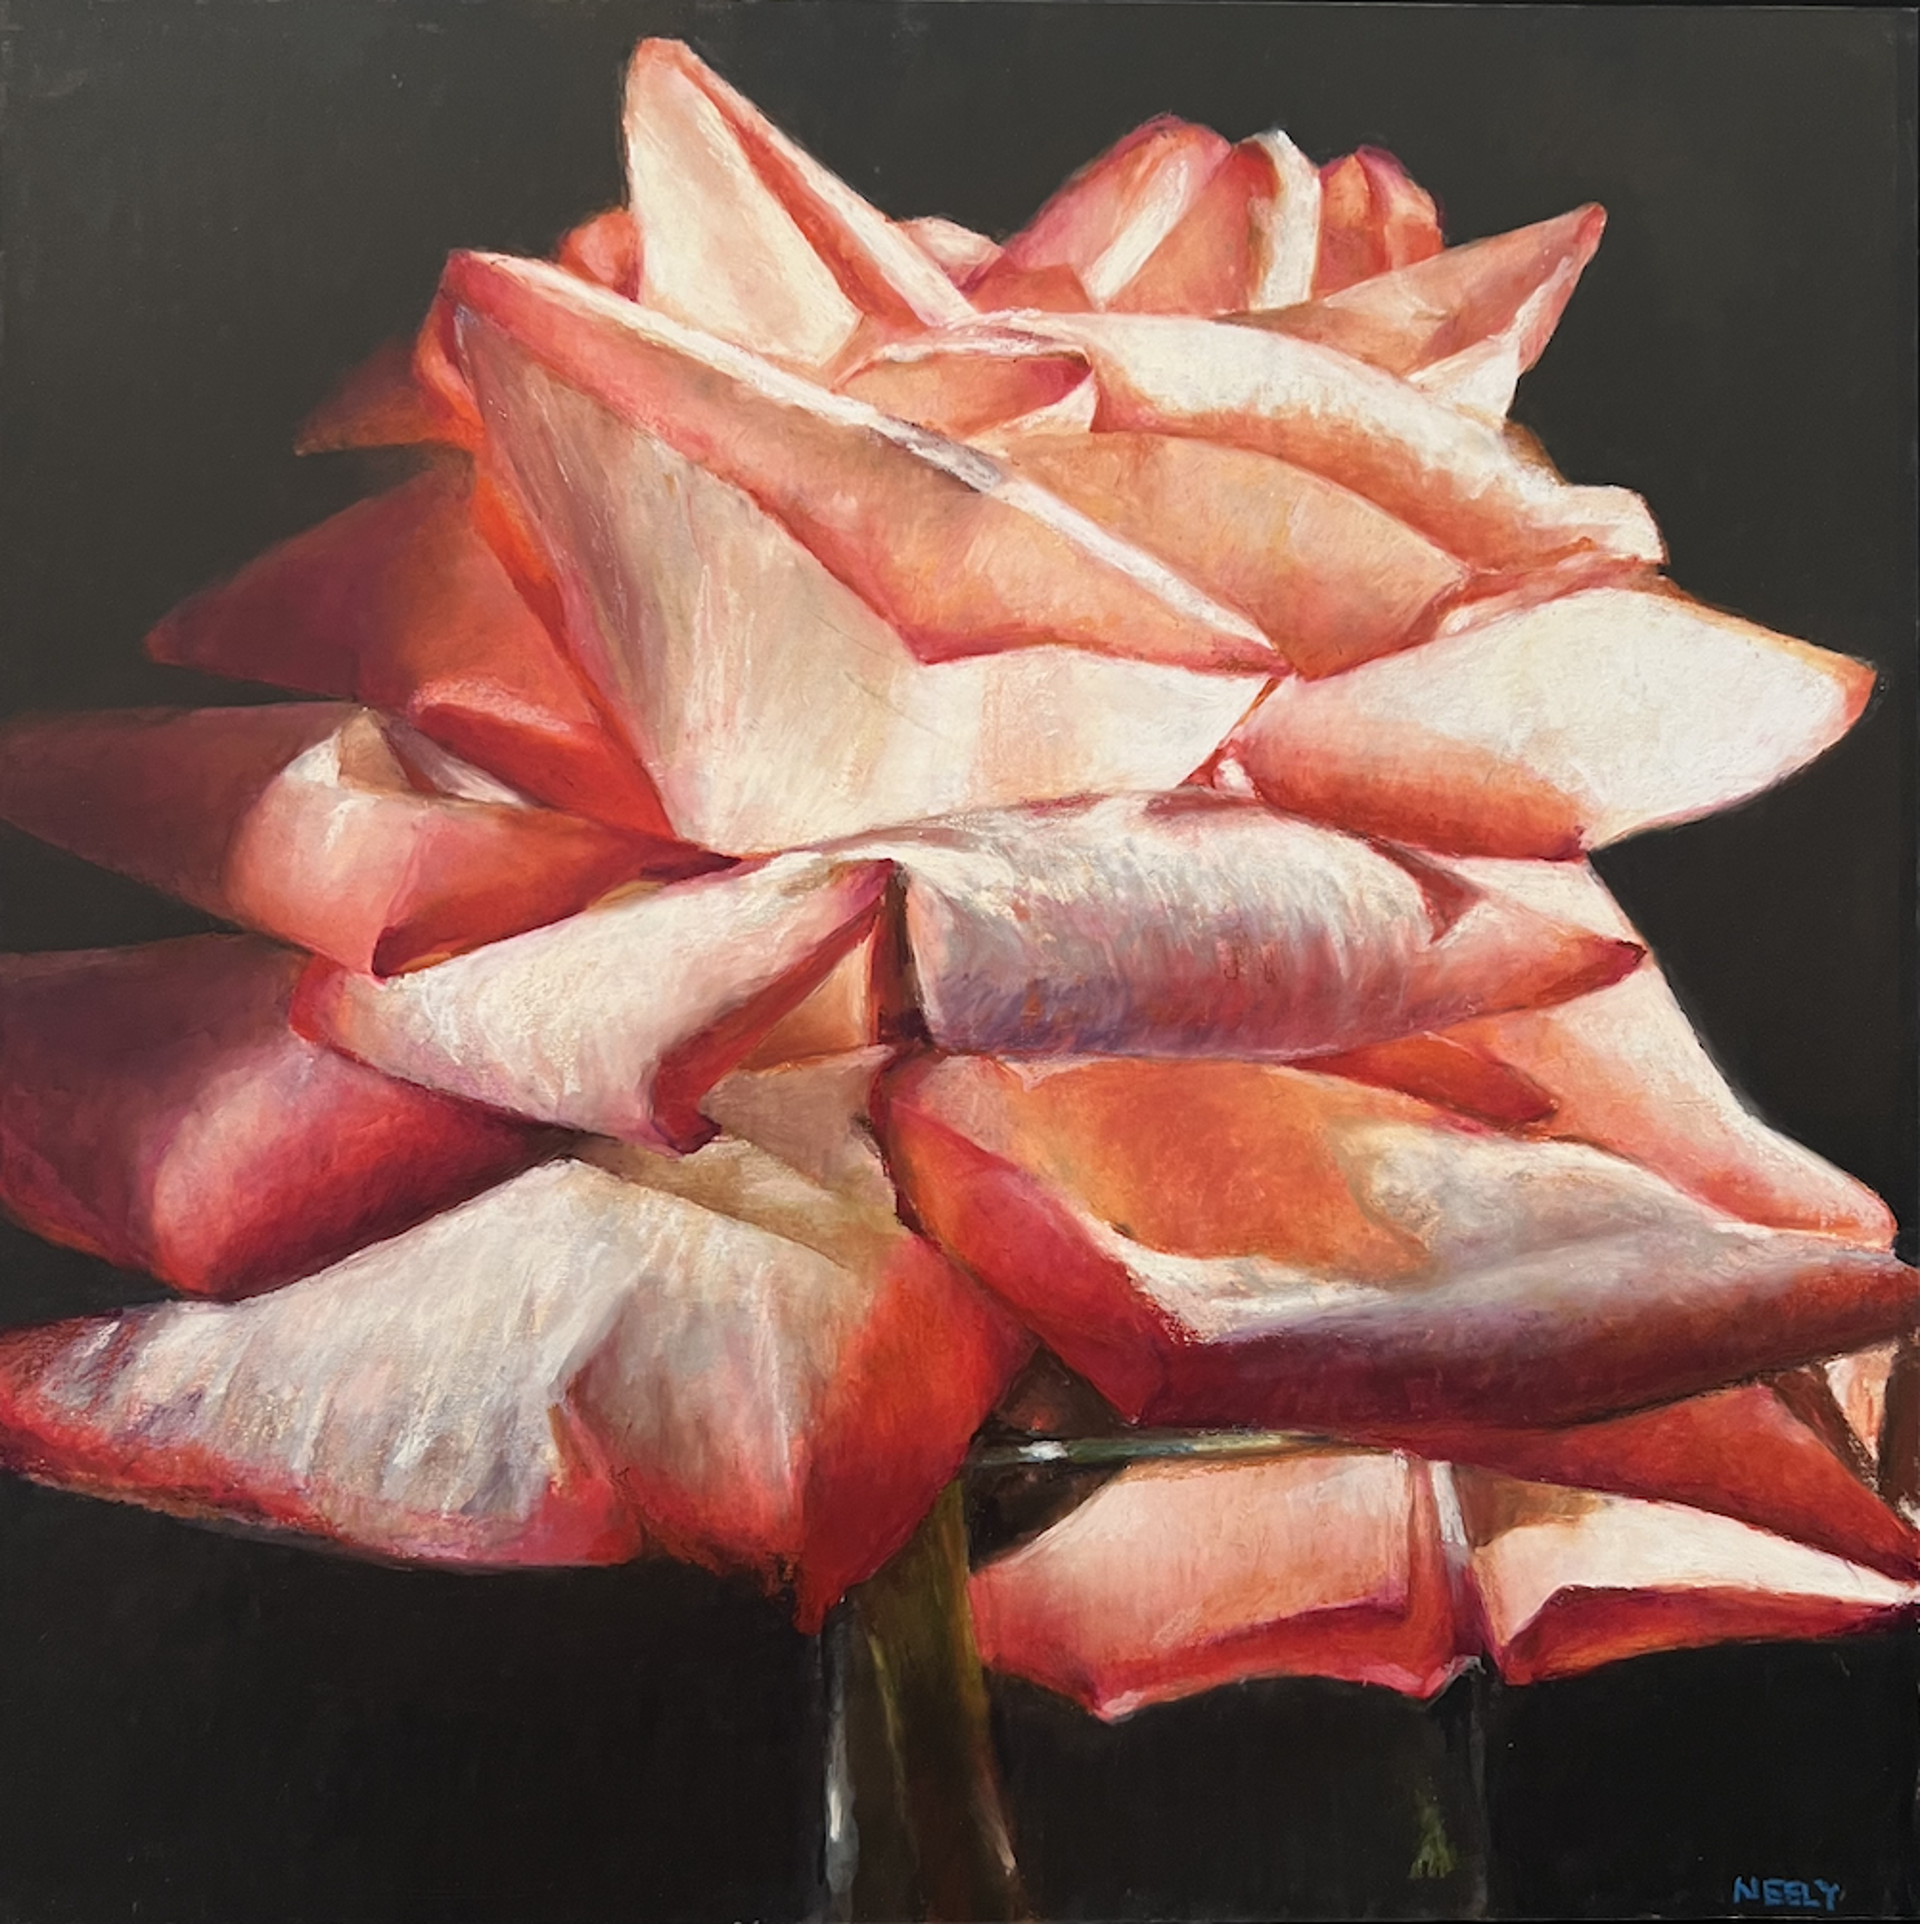 Midnight Rose by Stephanie Neely